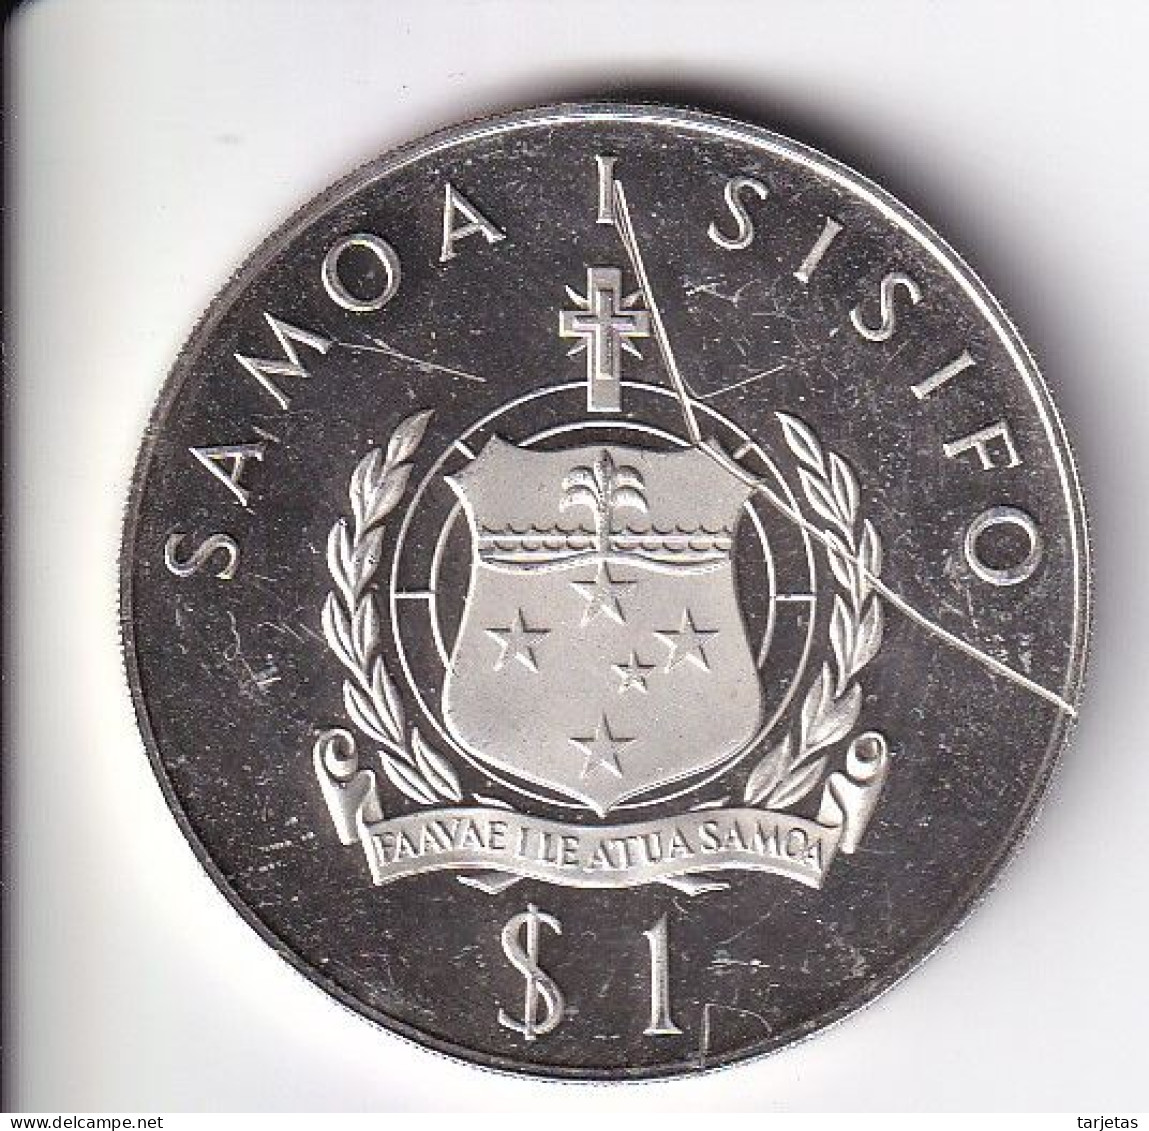 MONEDA DE PLATA DE SAMOA I SISIFO DE 1 DOLLAR DEL AÑO 1977 LINDBERGH FLIGHT - LA DE LA FOTO (CON RAYA DETRAS) - Amerikanisch-Samoa